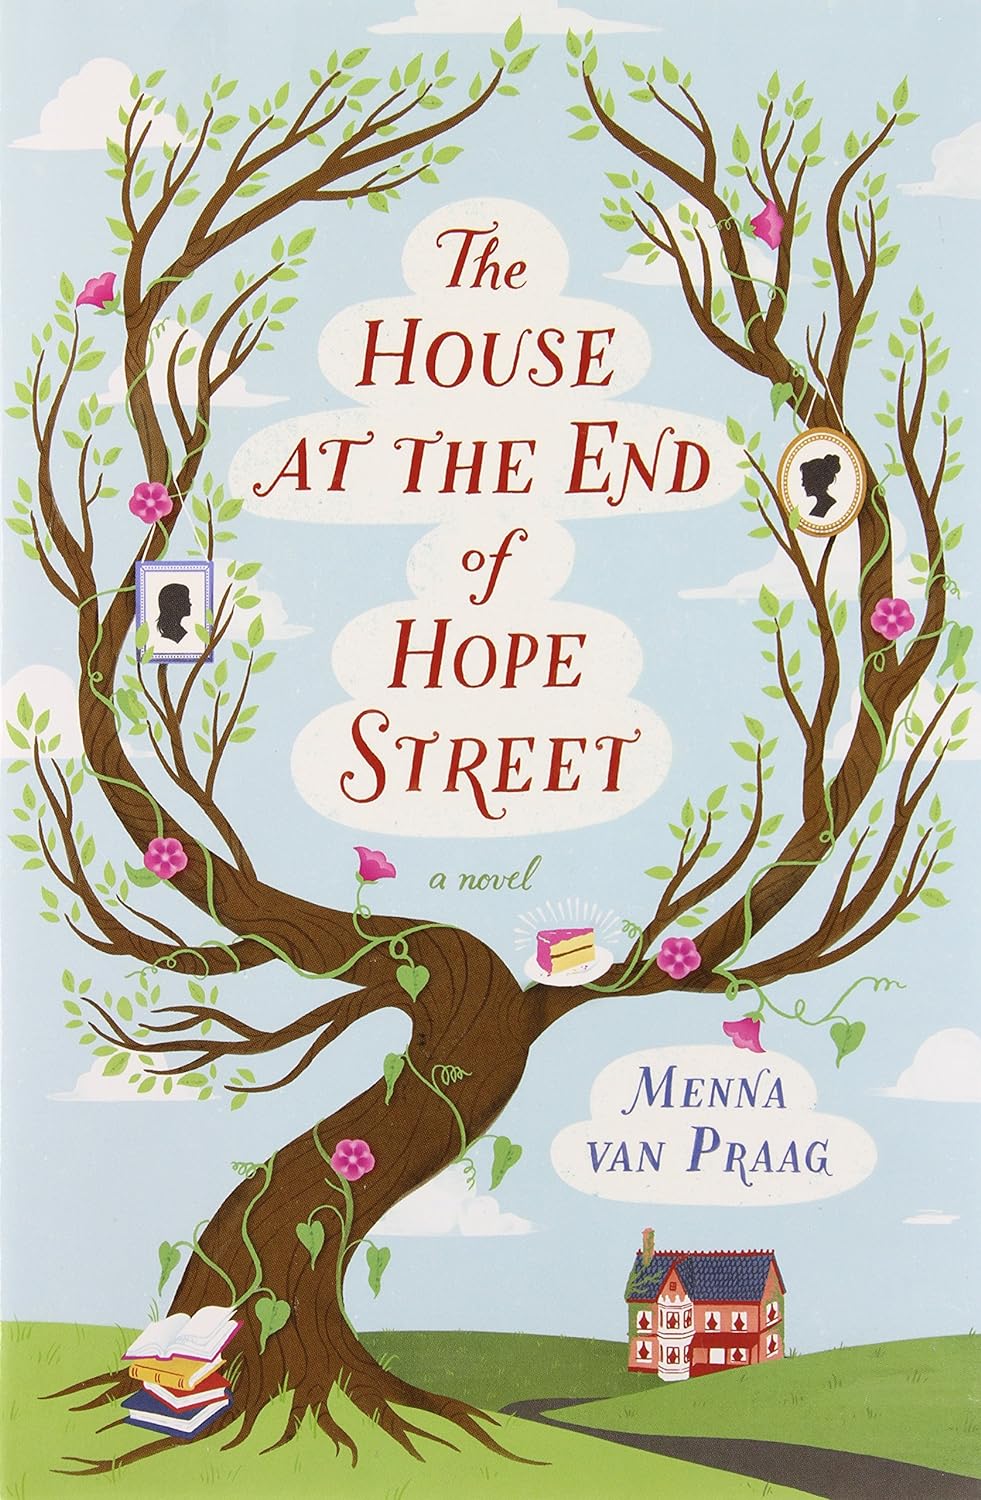 The House at the End of Hope Street: A Novel - Menna van Praag (Pre-Loved)